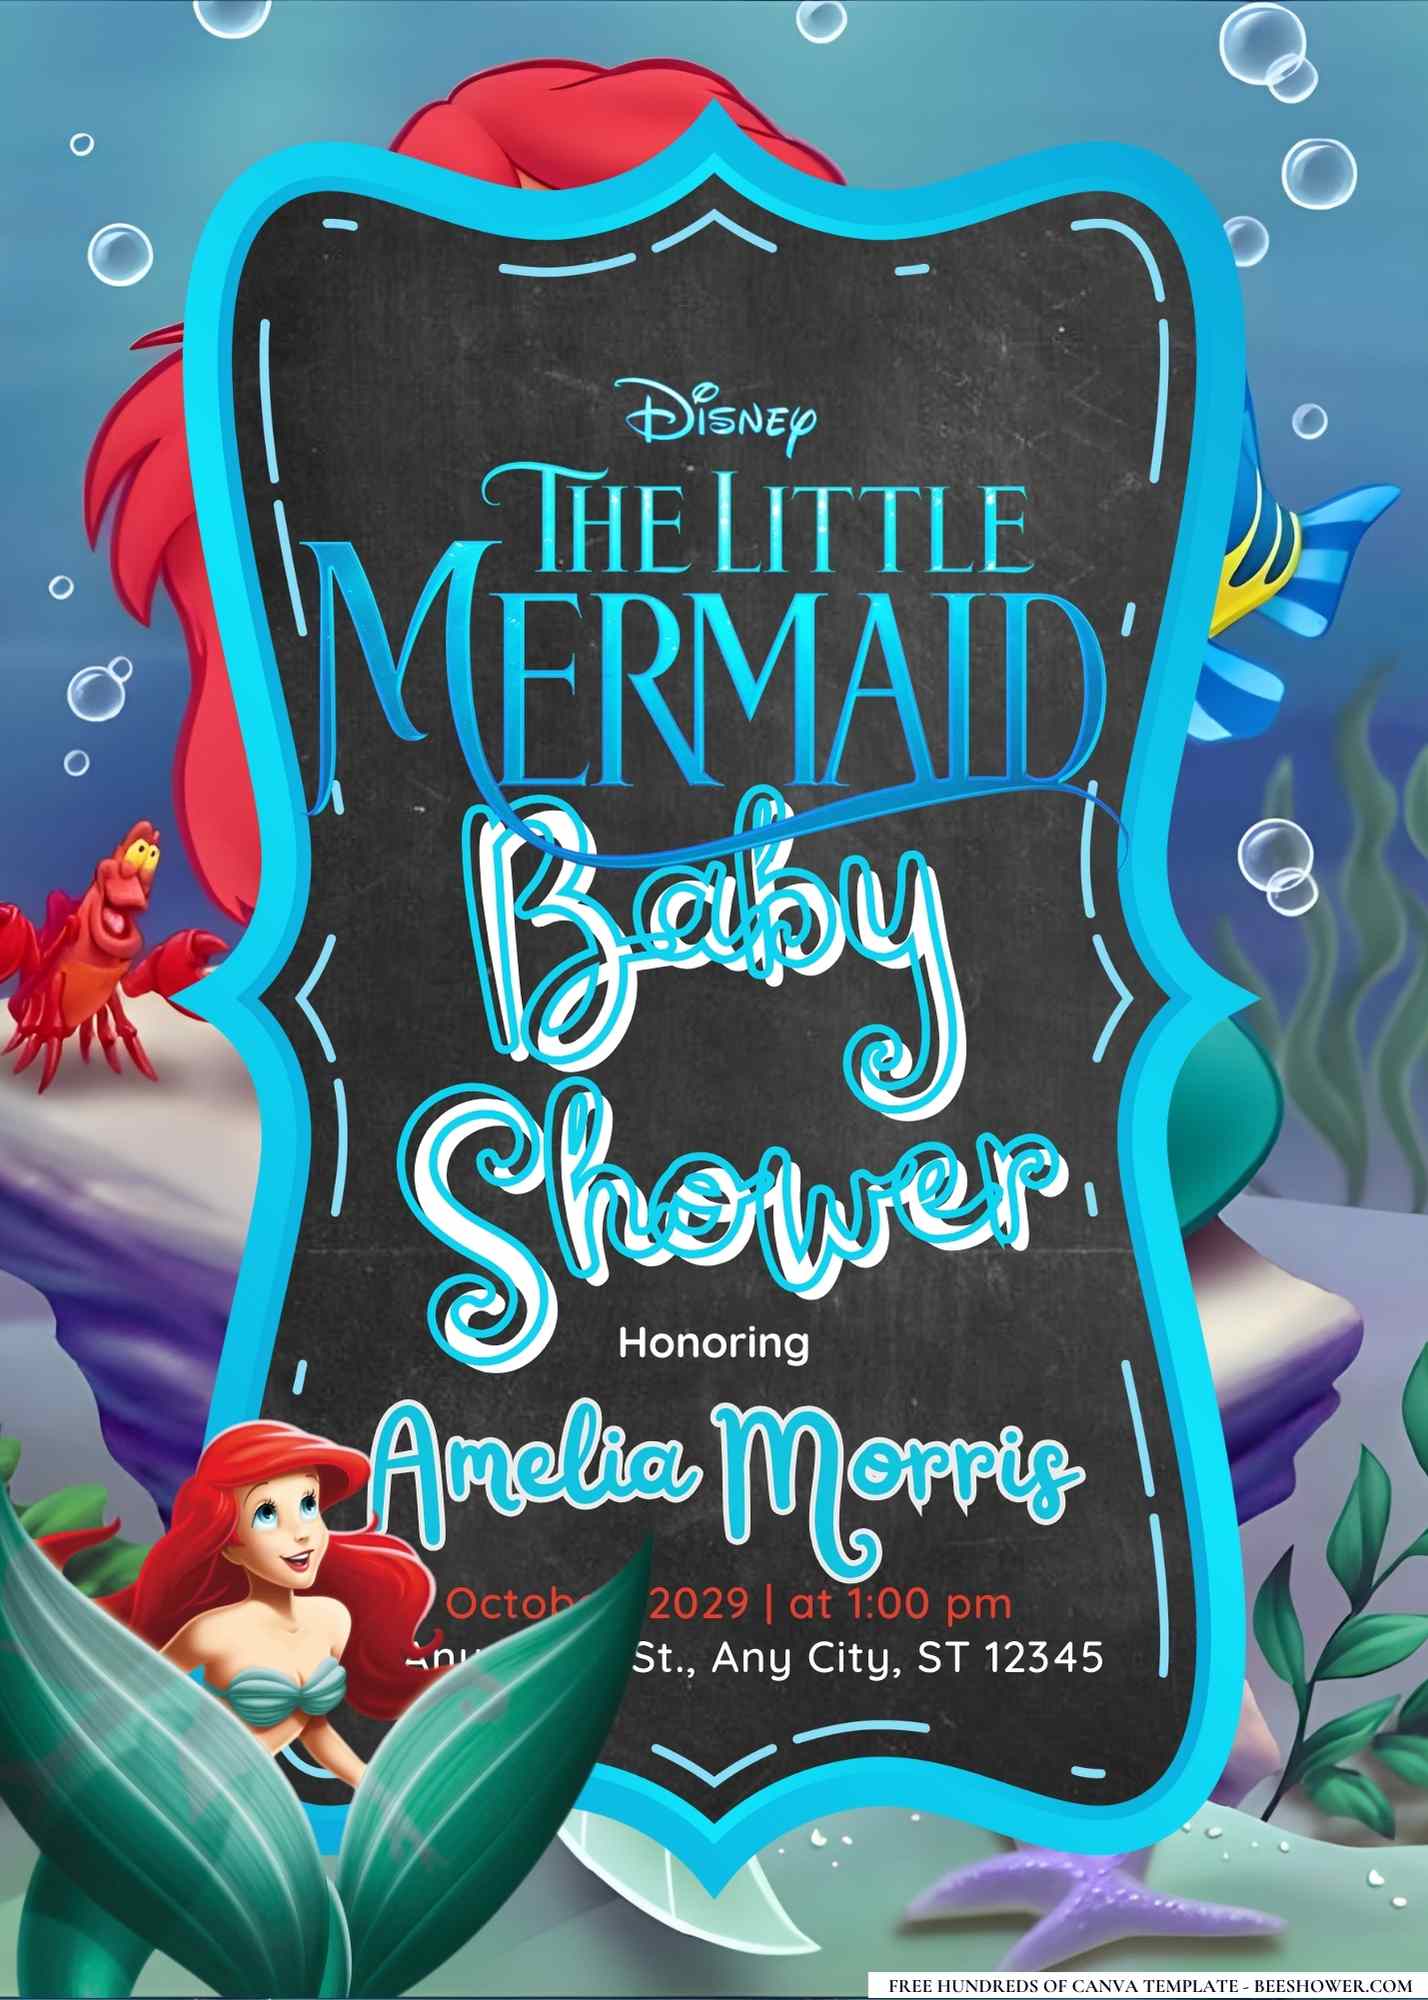 The Little Mermaid (Ariel) Baby Shower Invitation